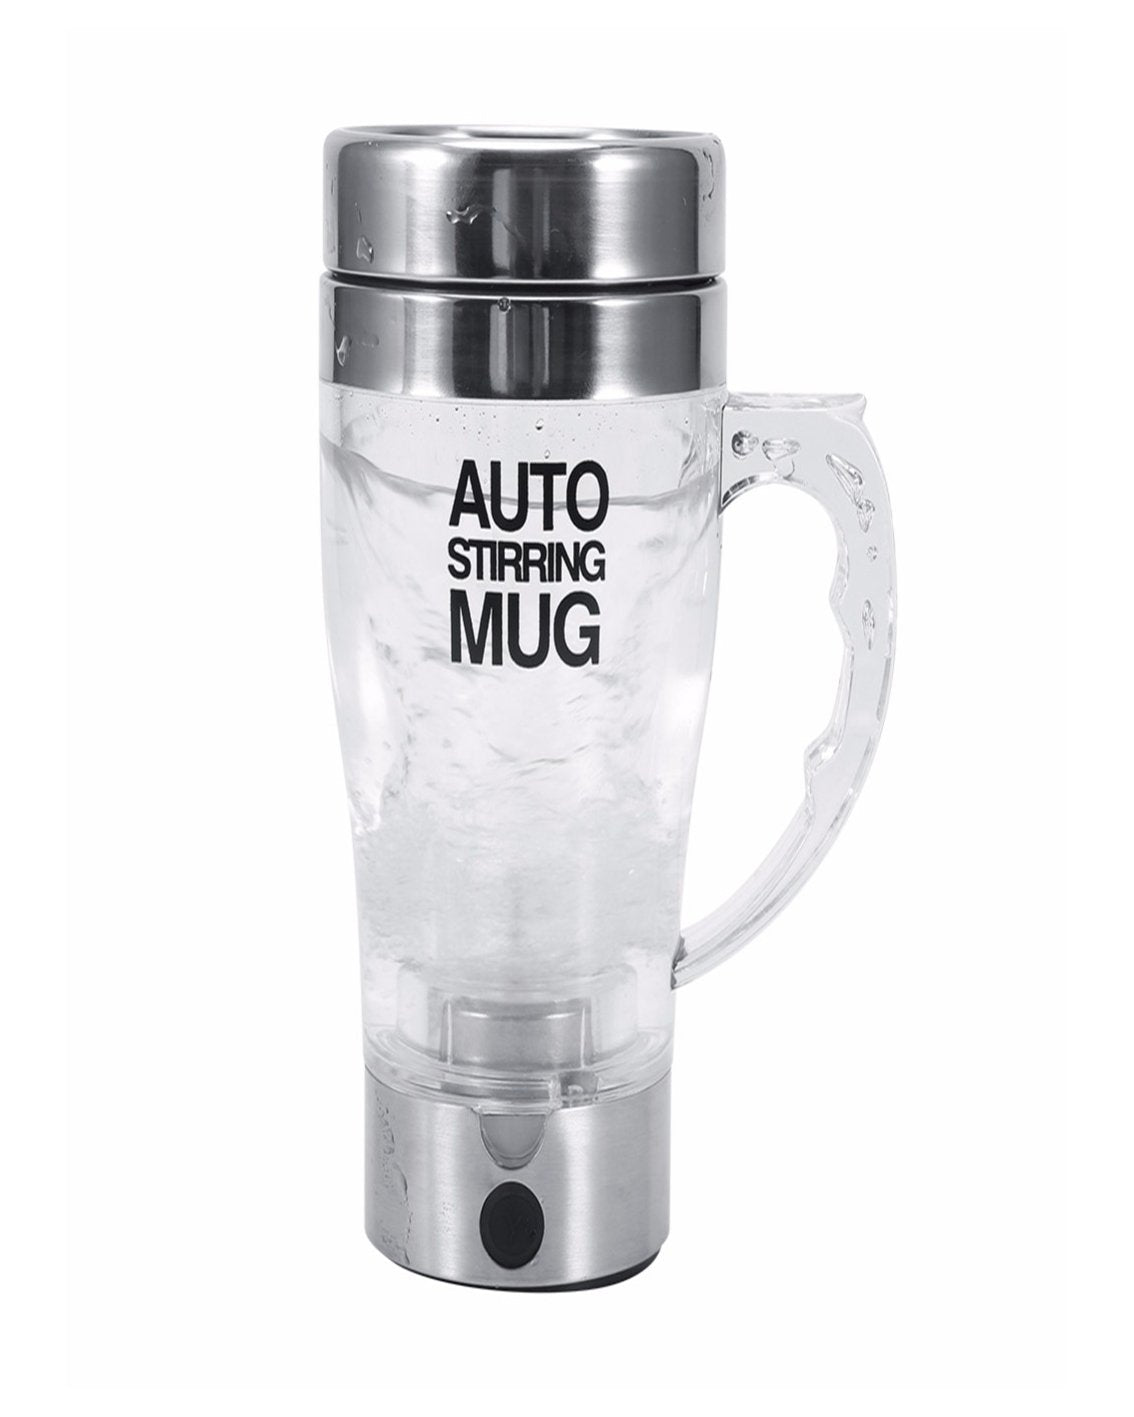 Mengshen Self Stirring Mug - Multipurpose Mixer Auto Stir Coffee Tea Cup Portable Electric Stainless Steel Transparent, A034